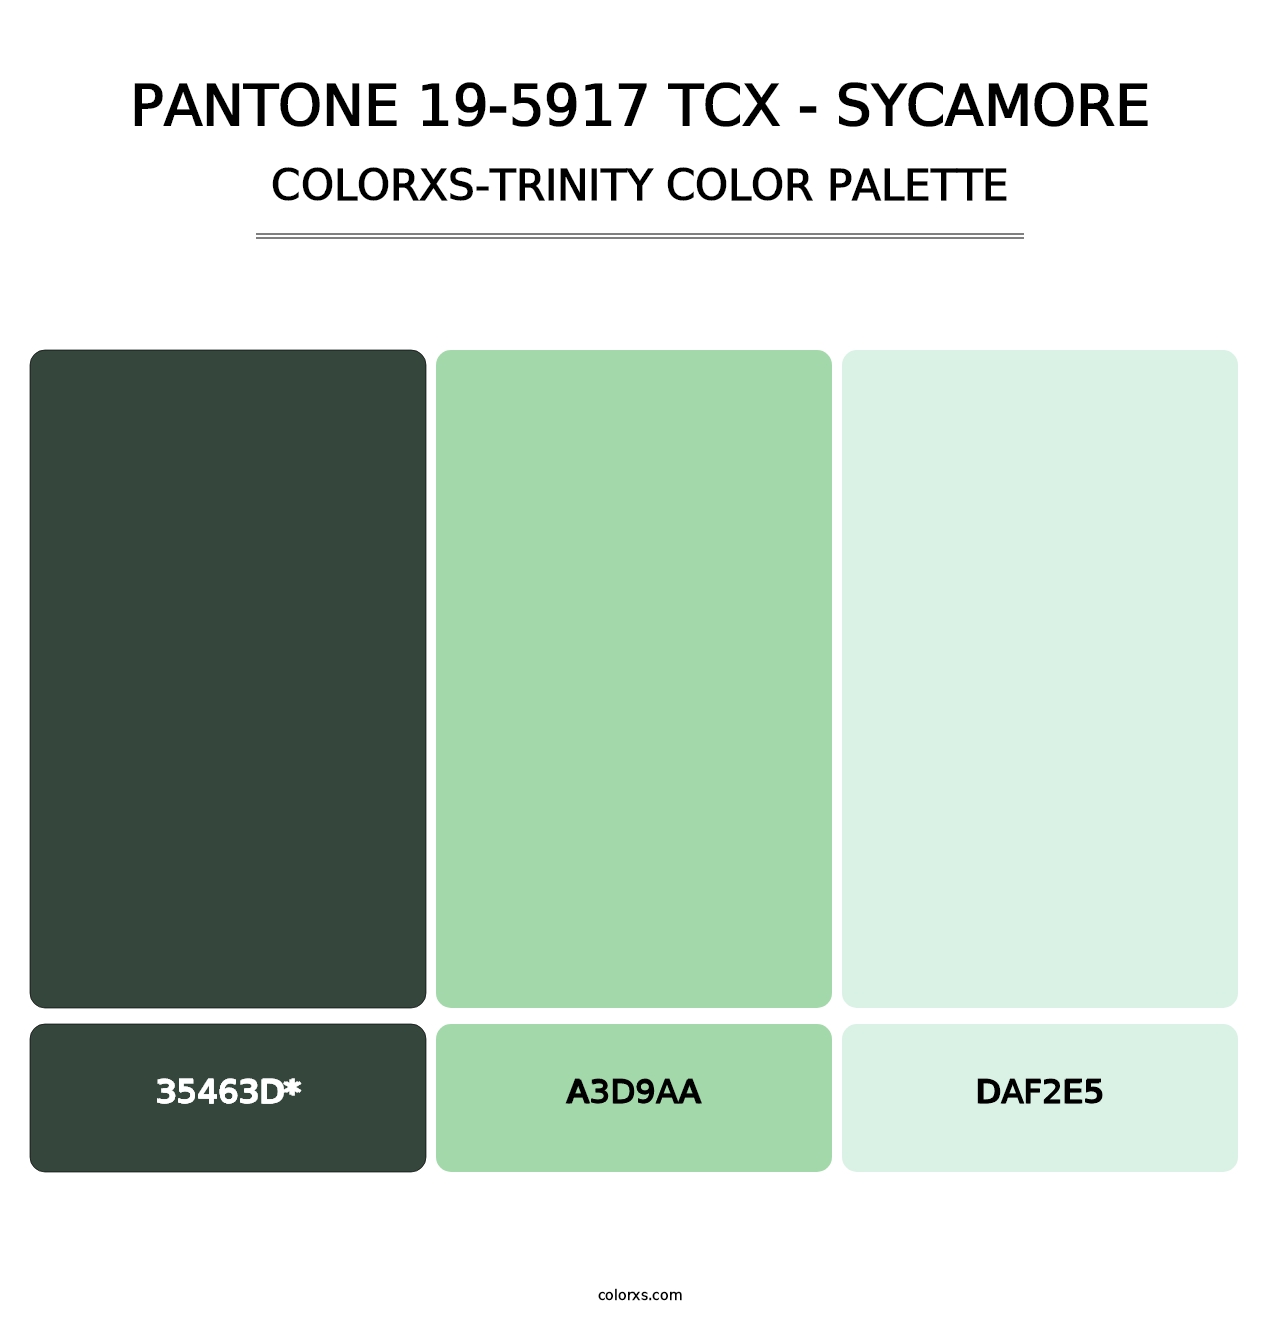 PANTONE 19-5917 TCX - Sycamore - Colorxs Trinity Palette